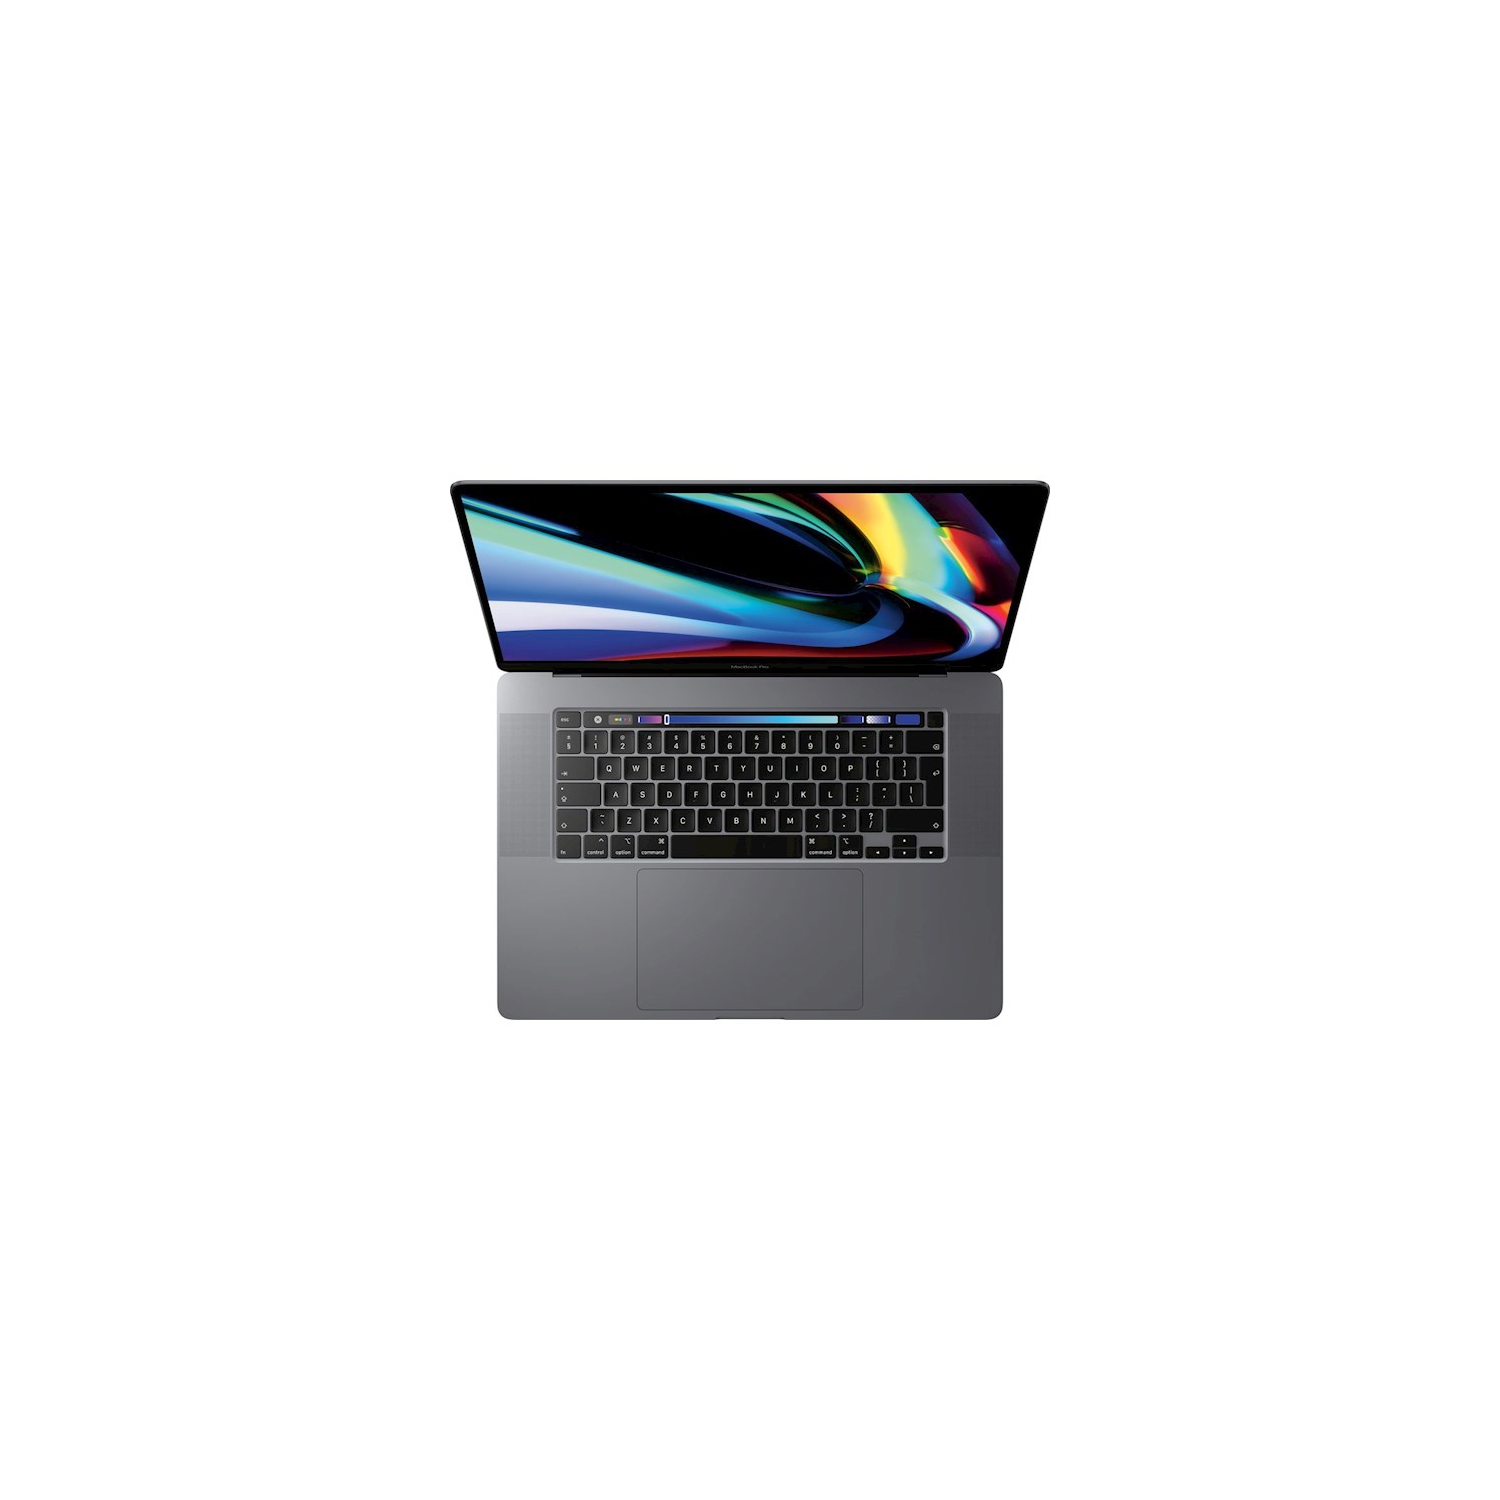 Refurbished (Good) - Apple MacBook Pro 16-Inch - Intel Core i9-9880H CPU @ 2.30GHz - 16GB RAM - 1TB SSD - 2019 Model - 16" - MVVM2LL/A - A2141 - Canadian French Keyboard